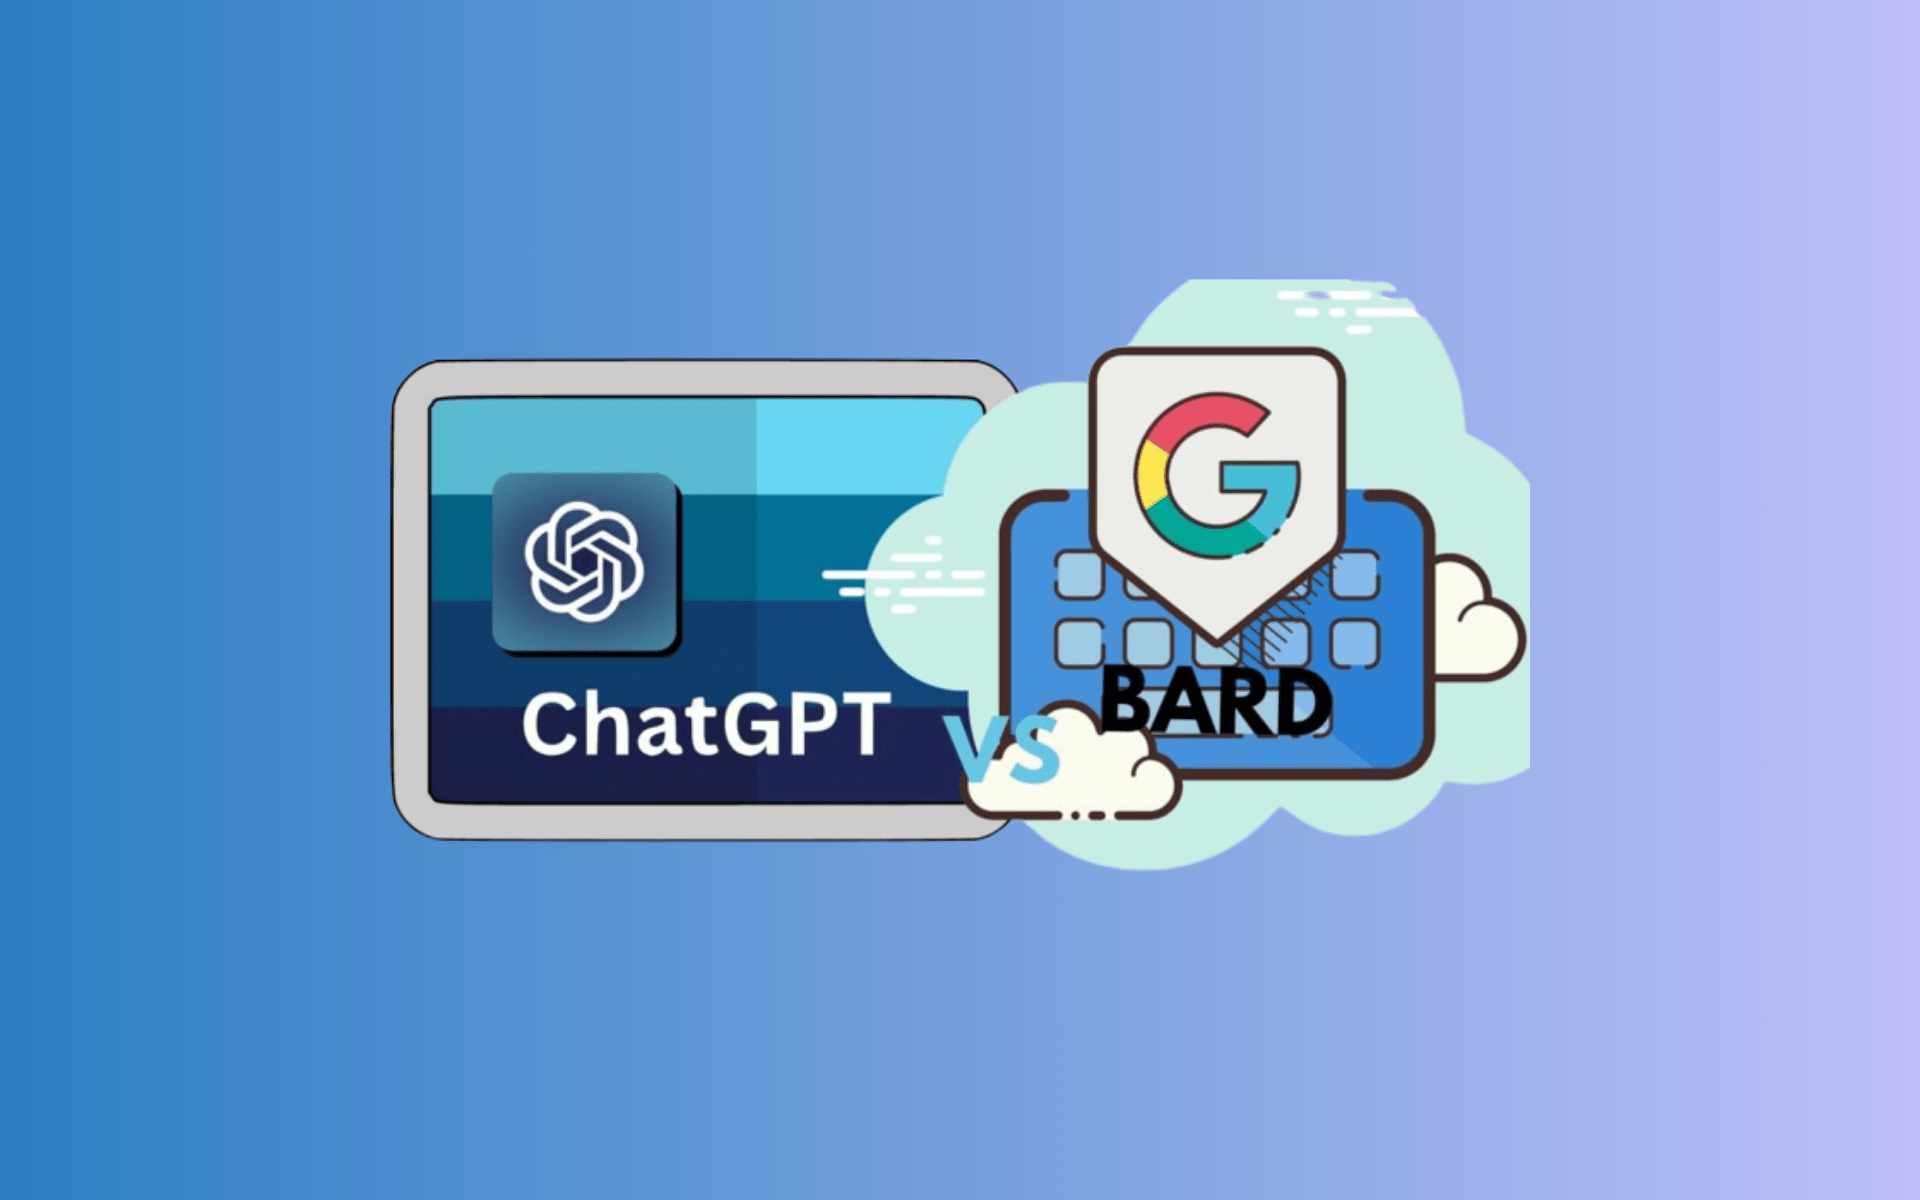 ChatGPT vs. Google Bard